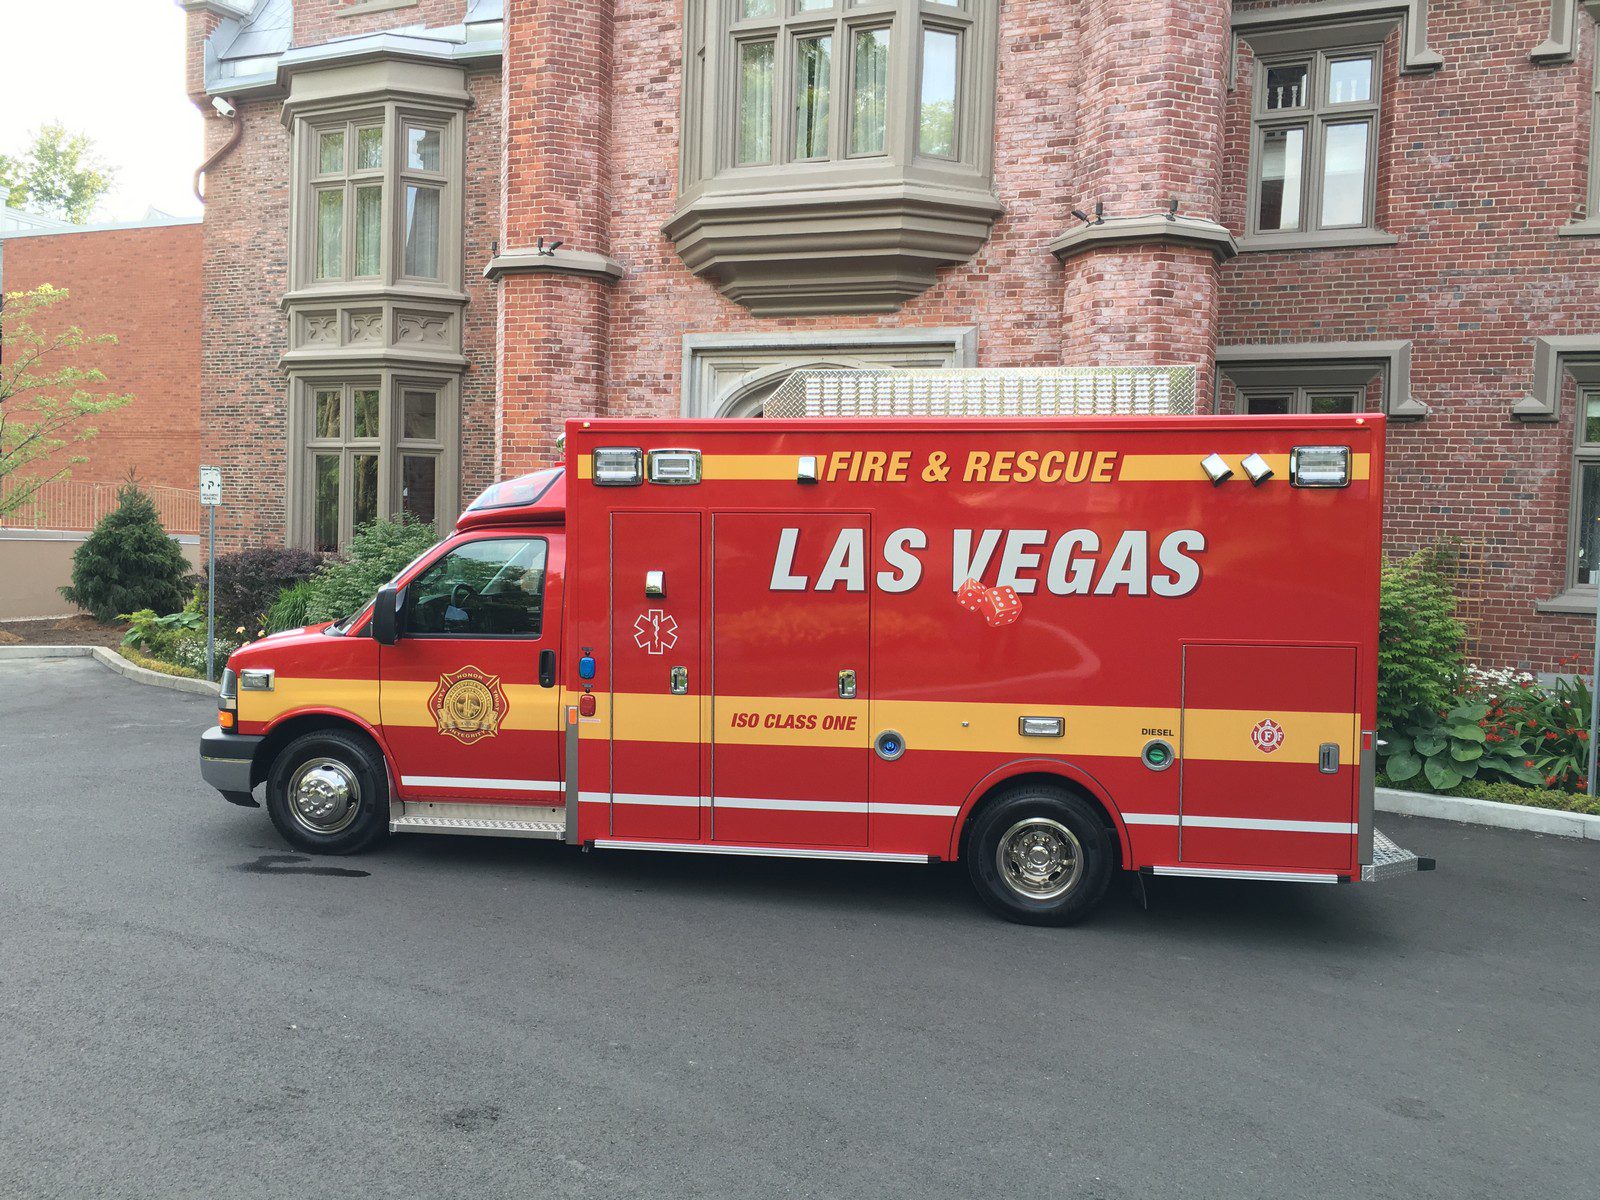 Las Vegas Fire & Rescue: Demers MX164 Type 3s